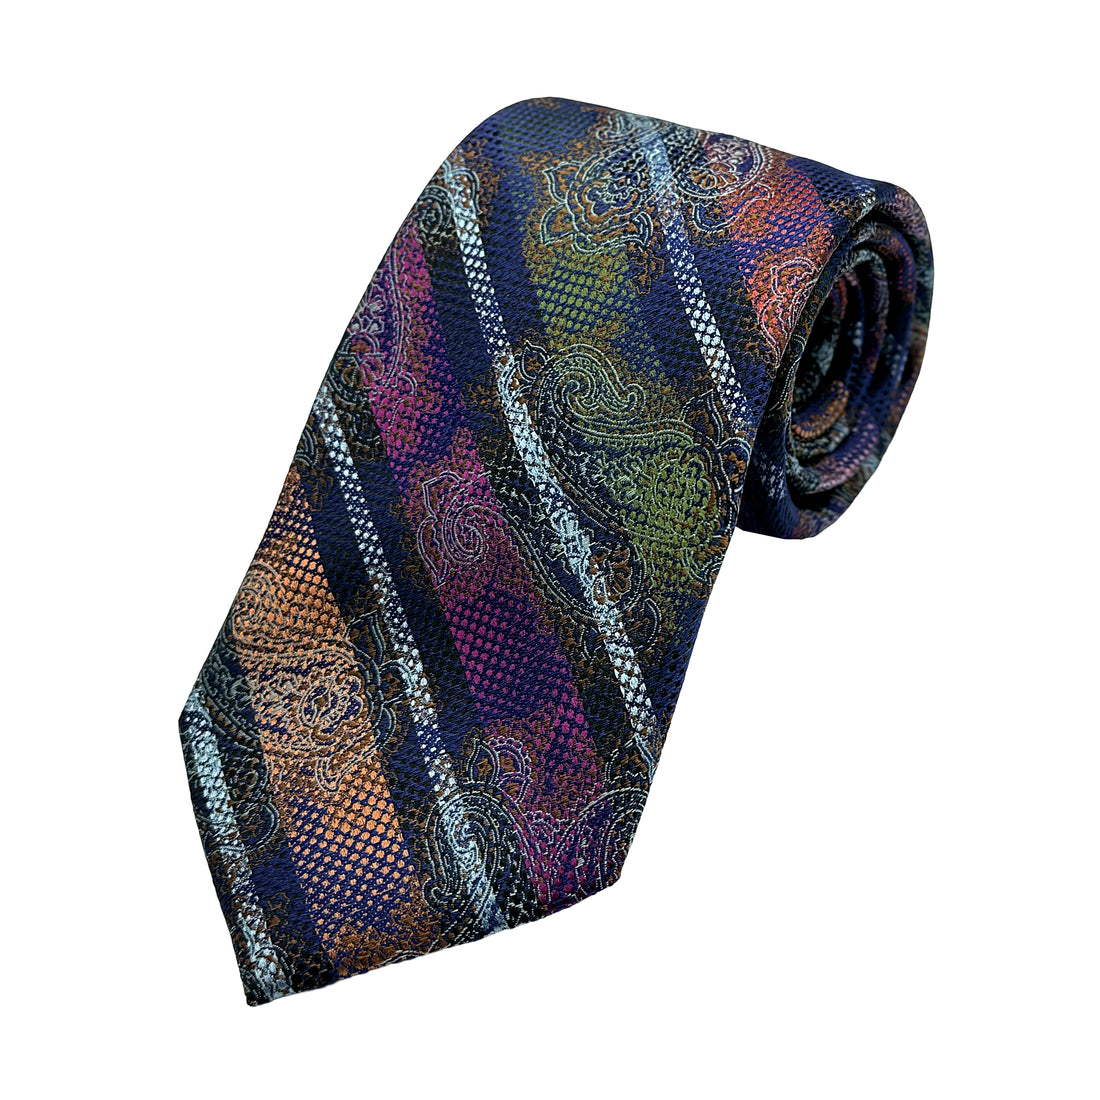 James Adelin Mens Luxury Silk Neck Tie in Paisley Striped Weave Design